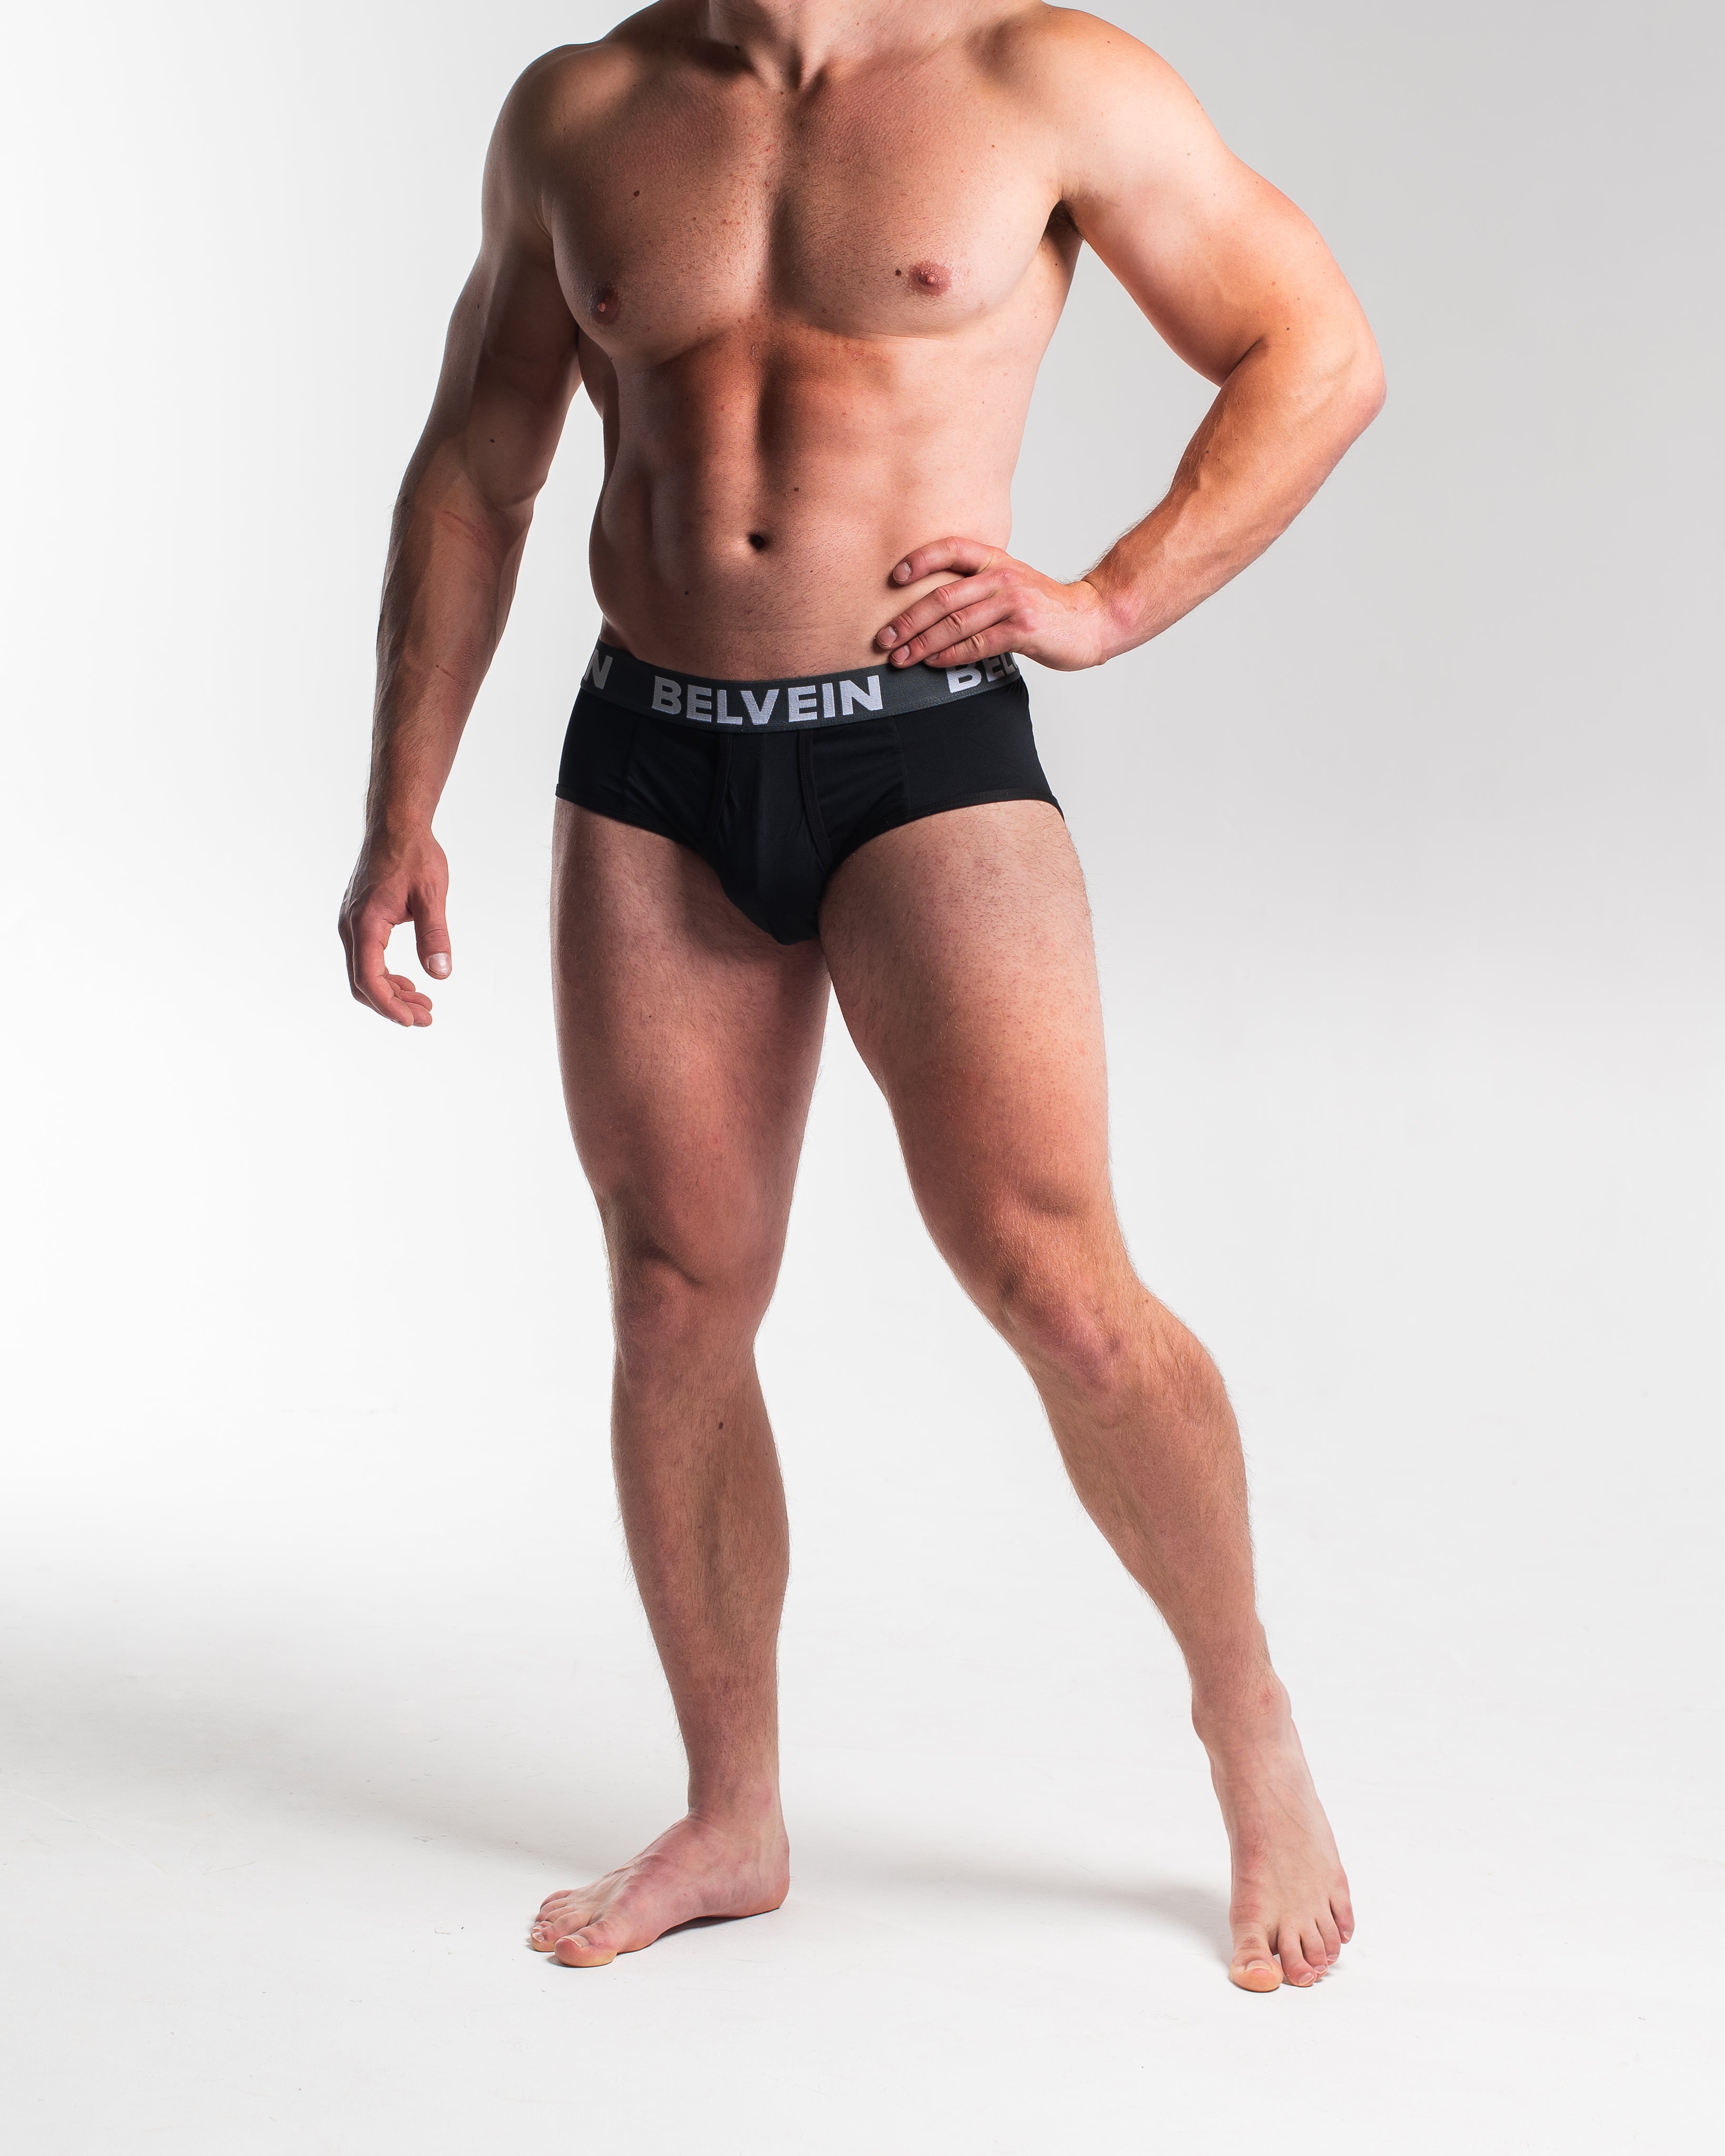 Men's Belvein Briefs 2 Pack  Men's Lifting Underwear - A7